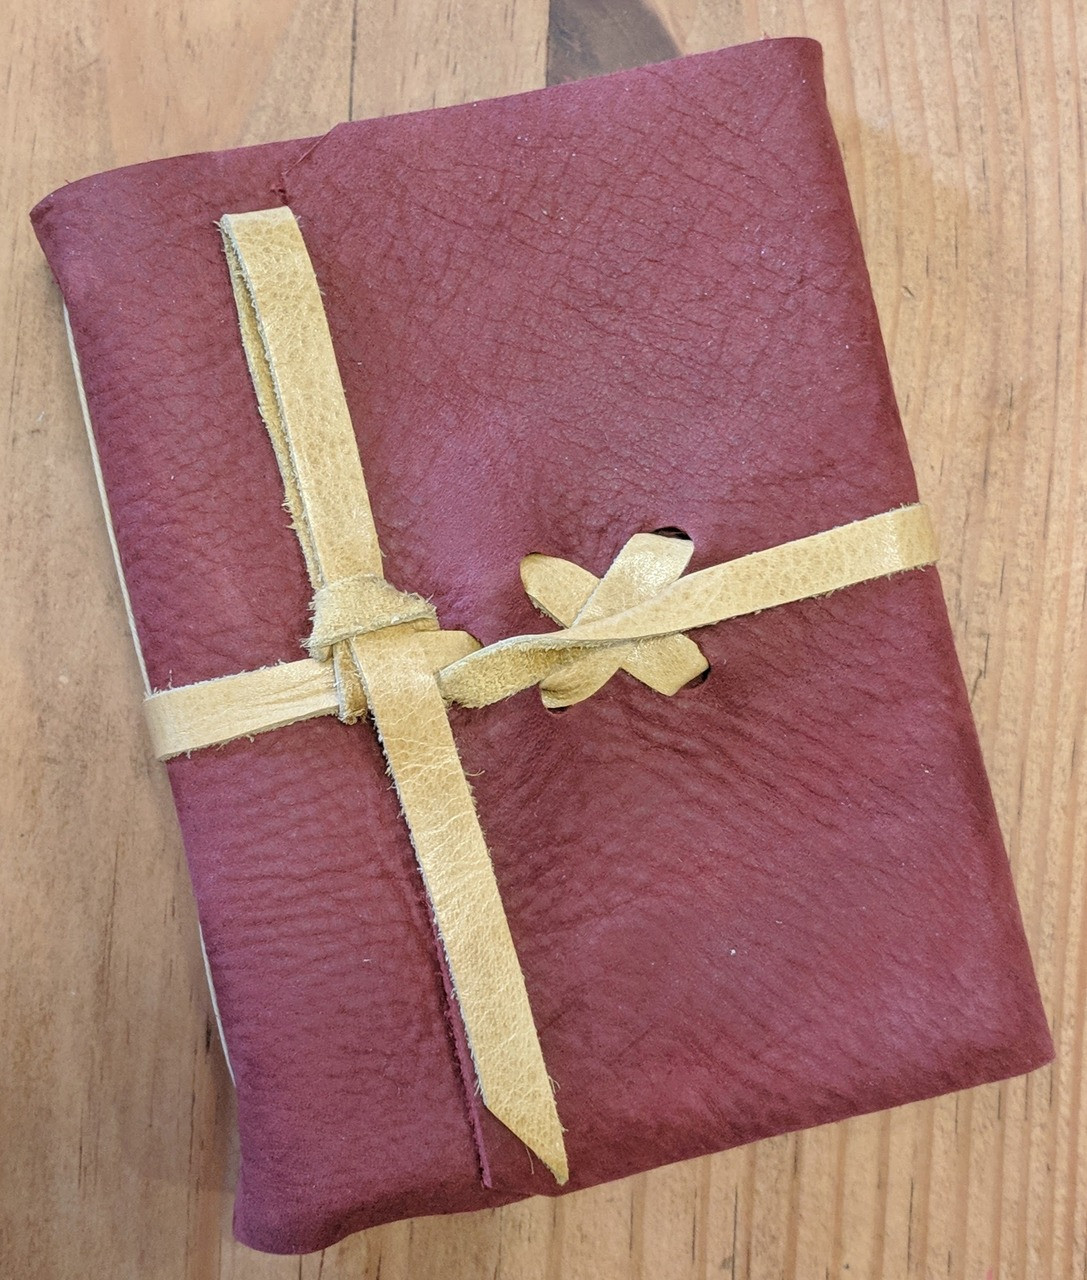 spellbinding journals - small red